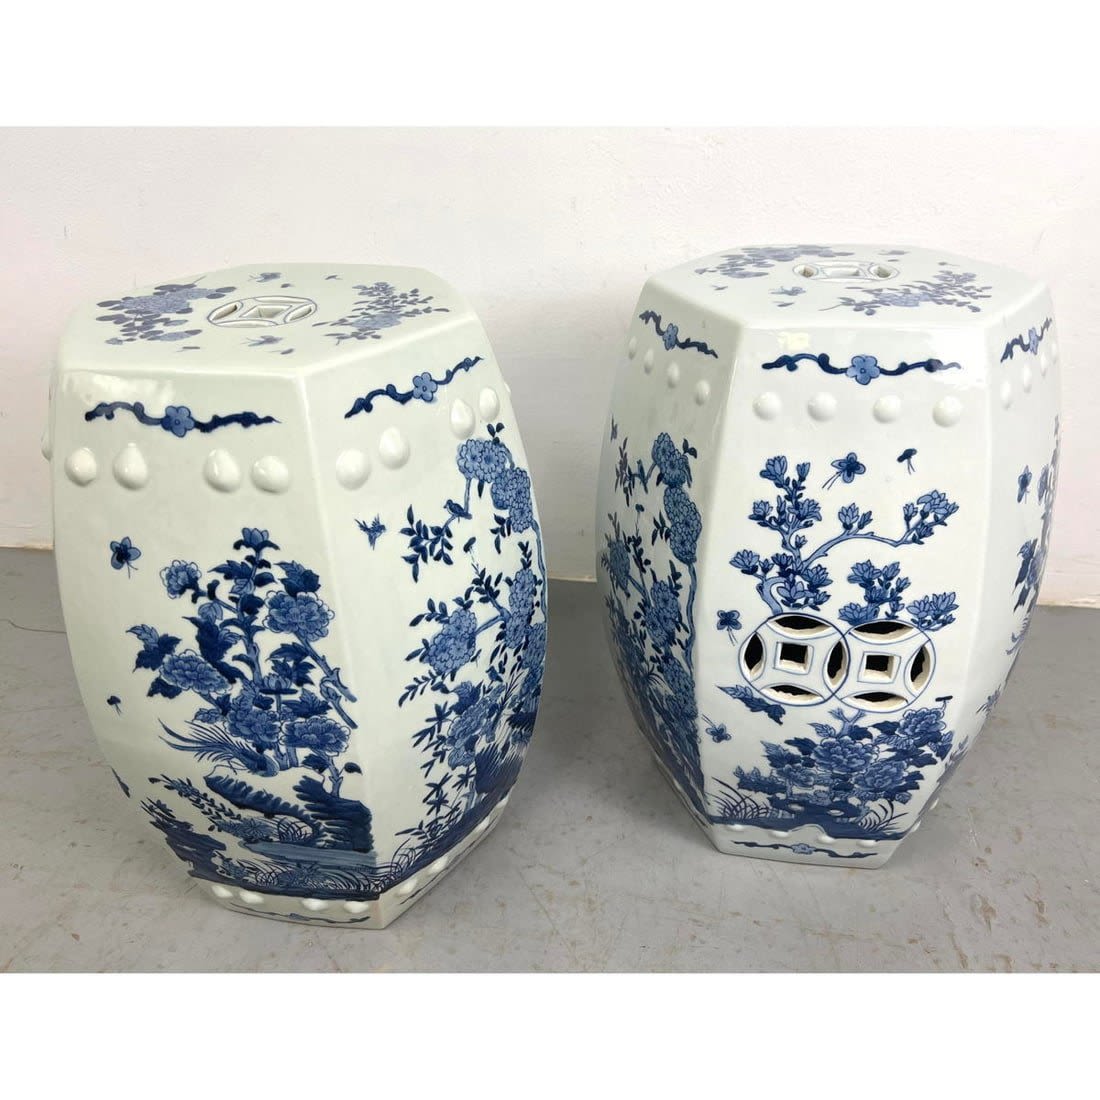 Pr Asian Ceramic Garden Seats  3ad6d4